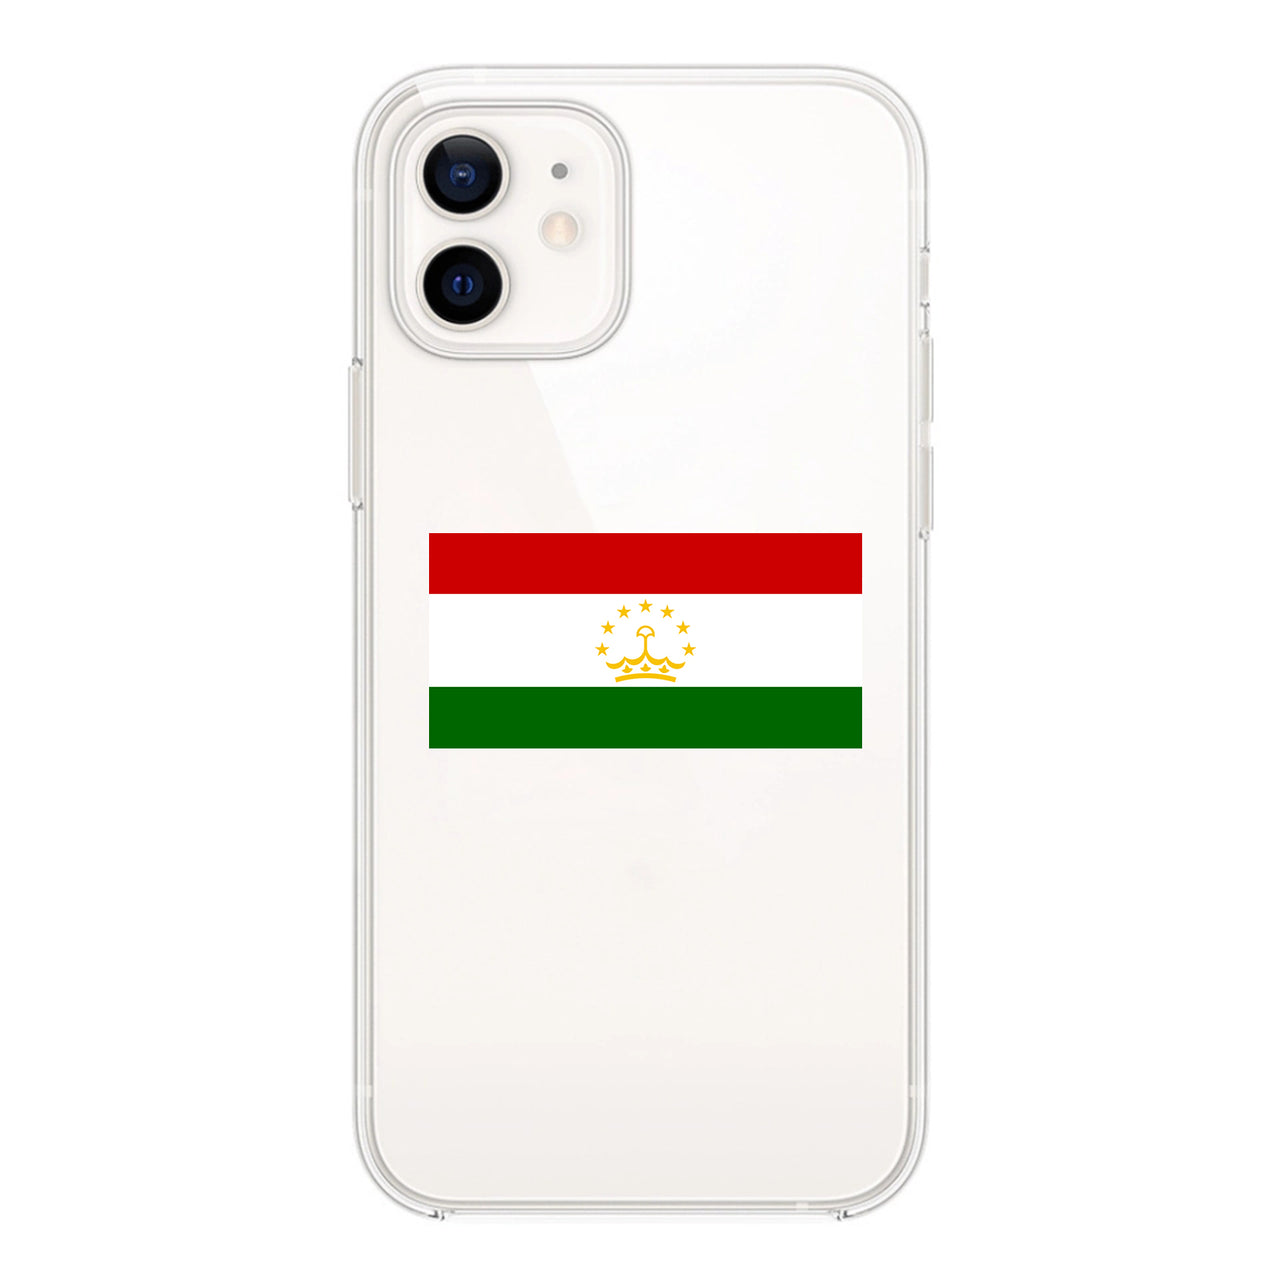 Tajikistan Designed Transparent Silicone iPhone Cases